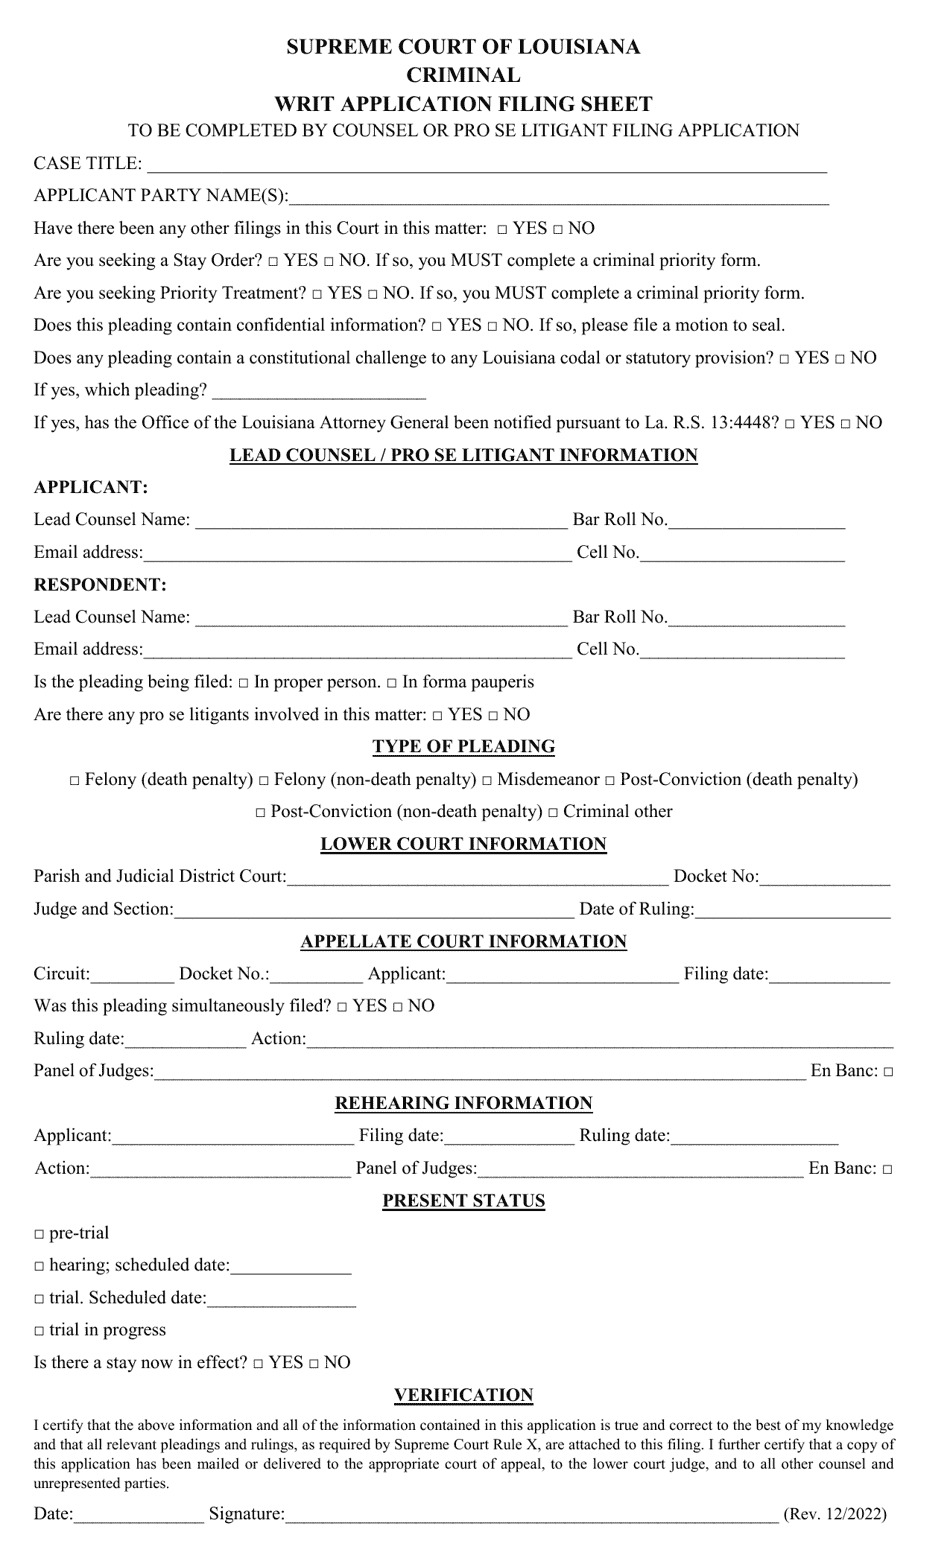 Criminal Writ Application Filing Sheet - Louisiana, Page 1